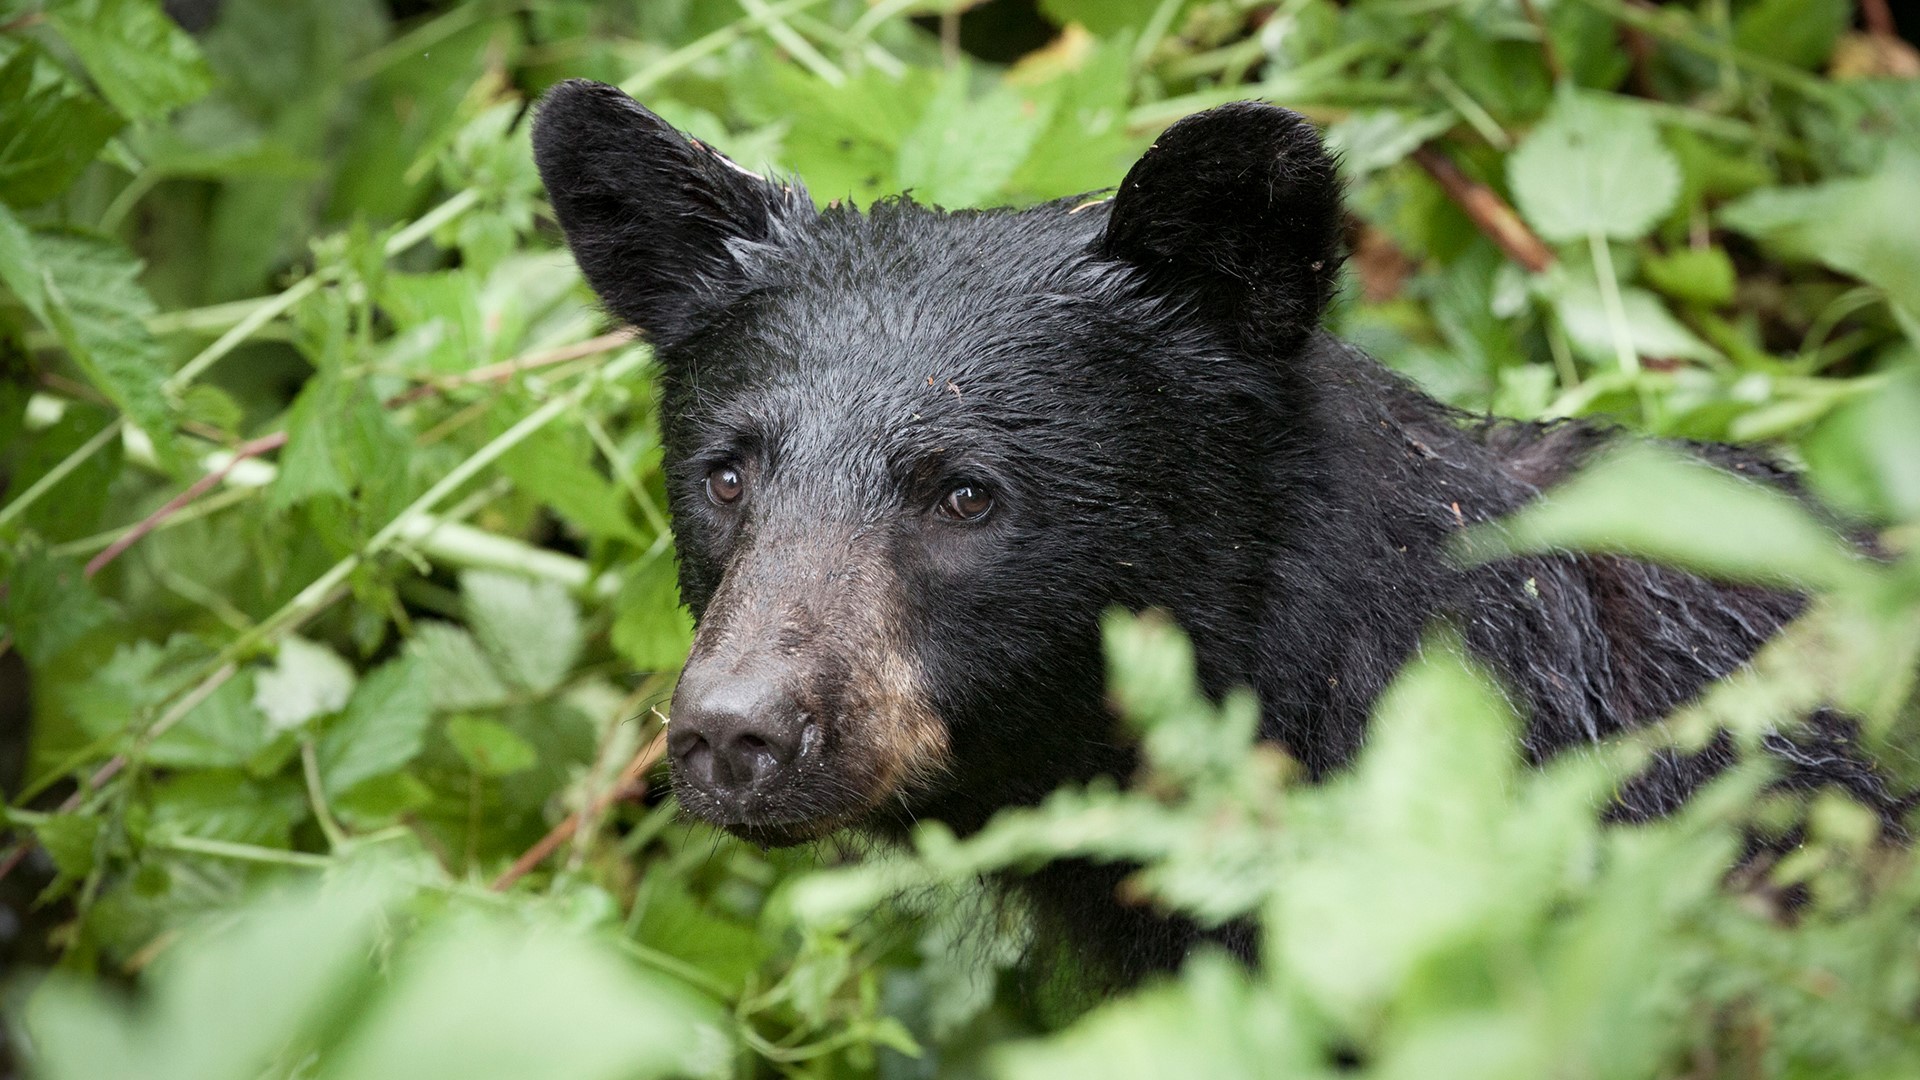 Bear activity on the rise, Kentucky Fish and Wildlife say | ktvb.com